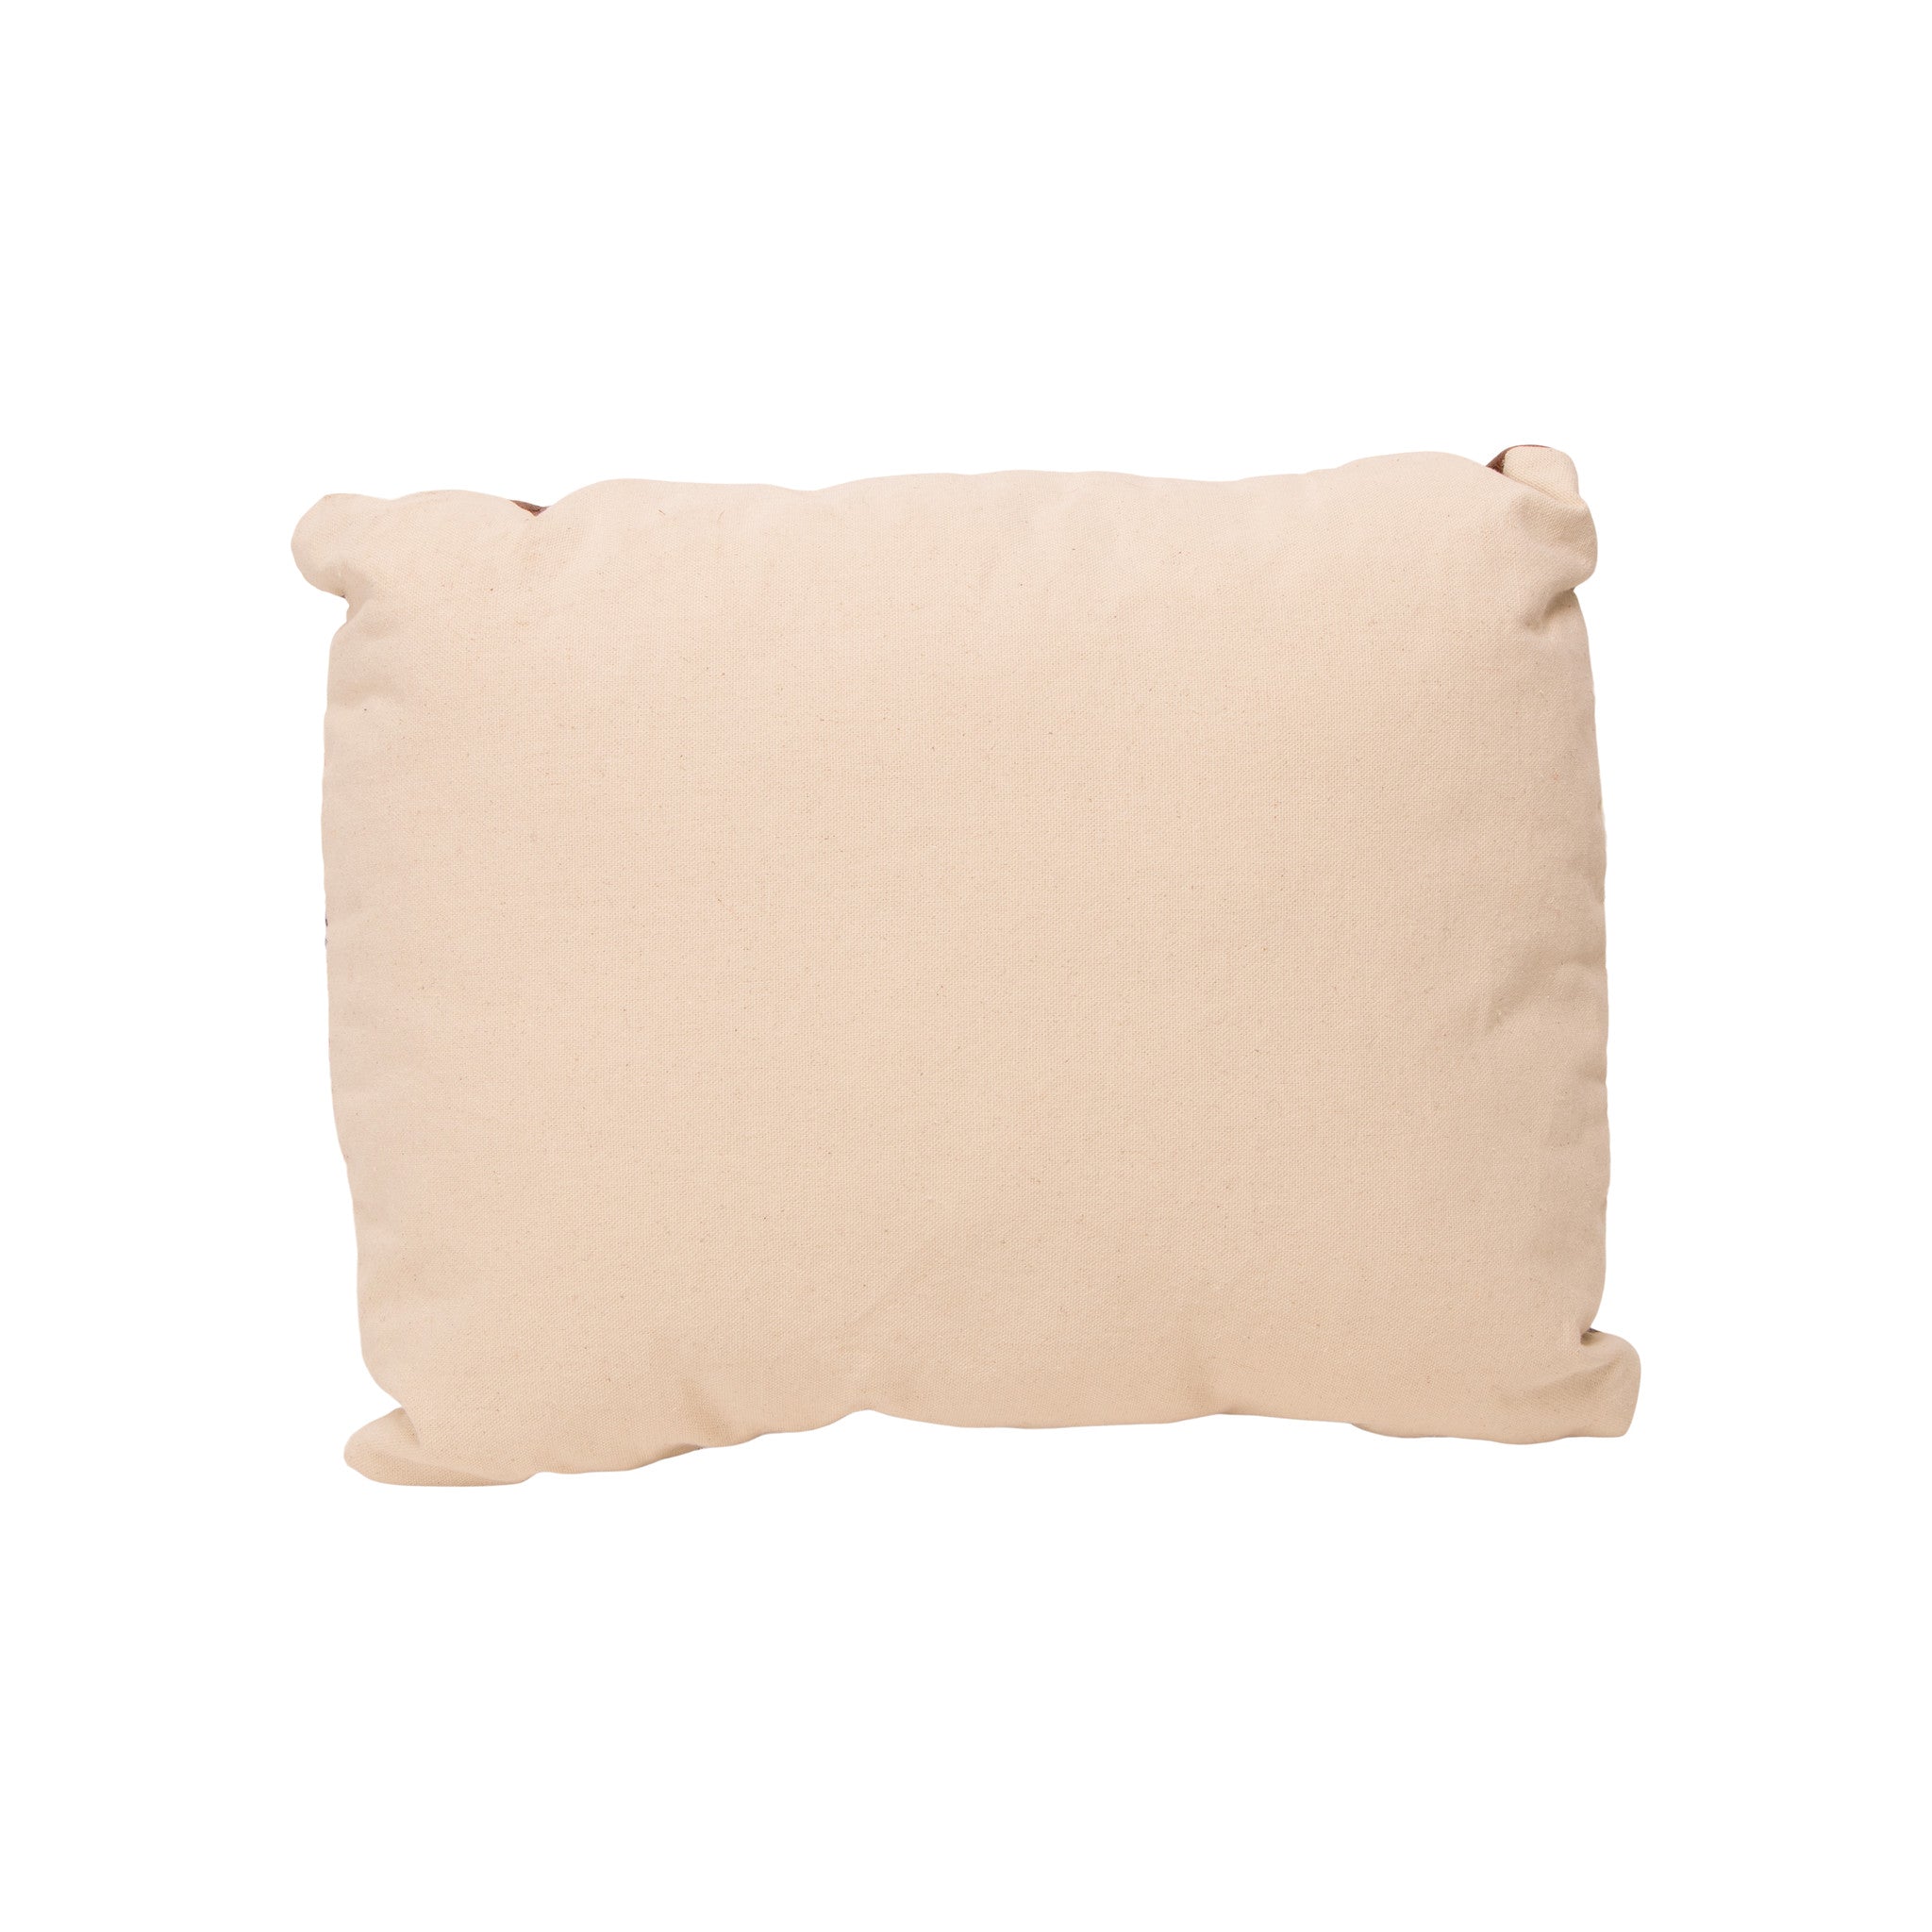 Navajo Transitional Pillow